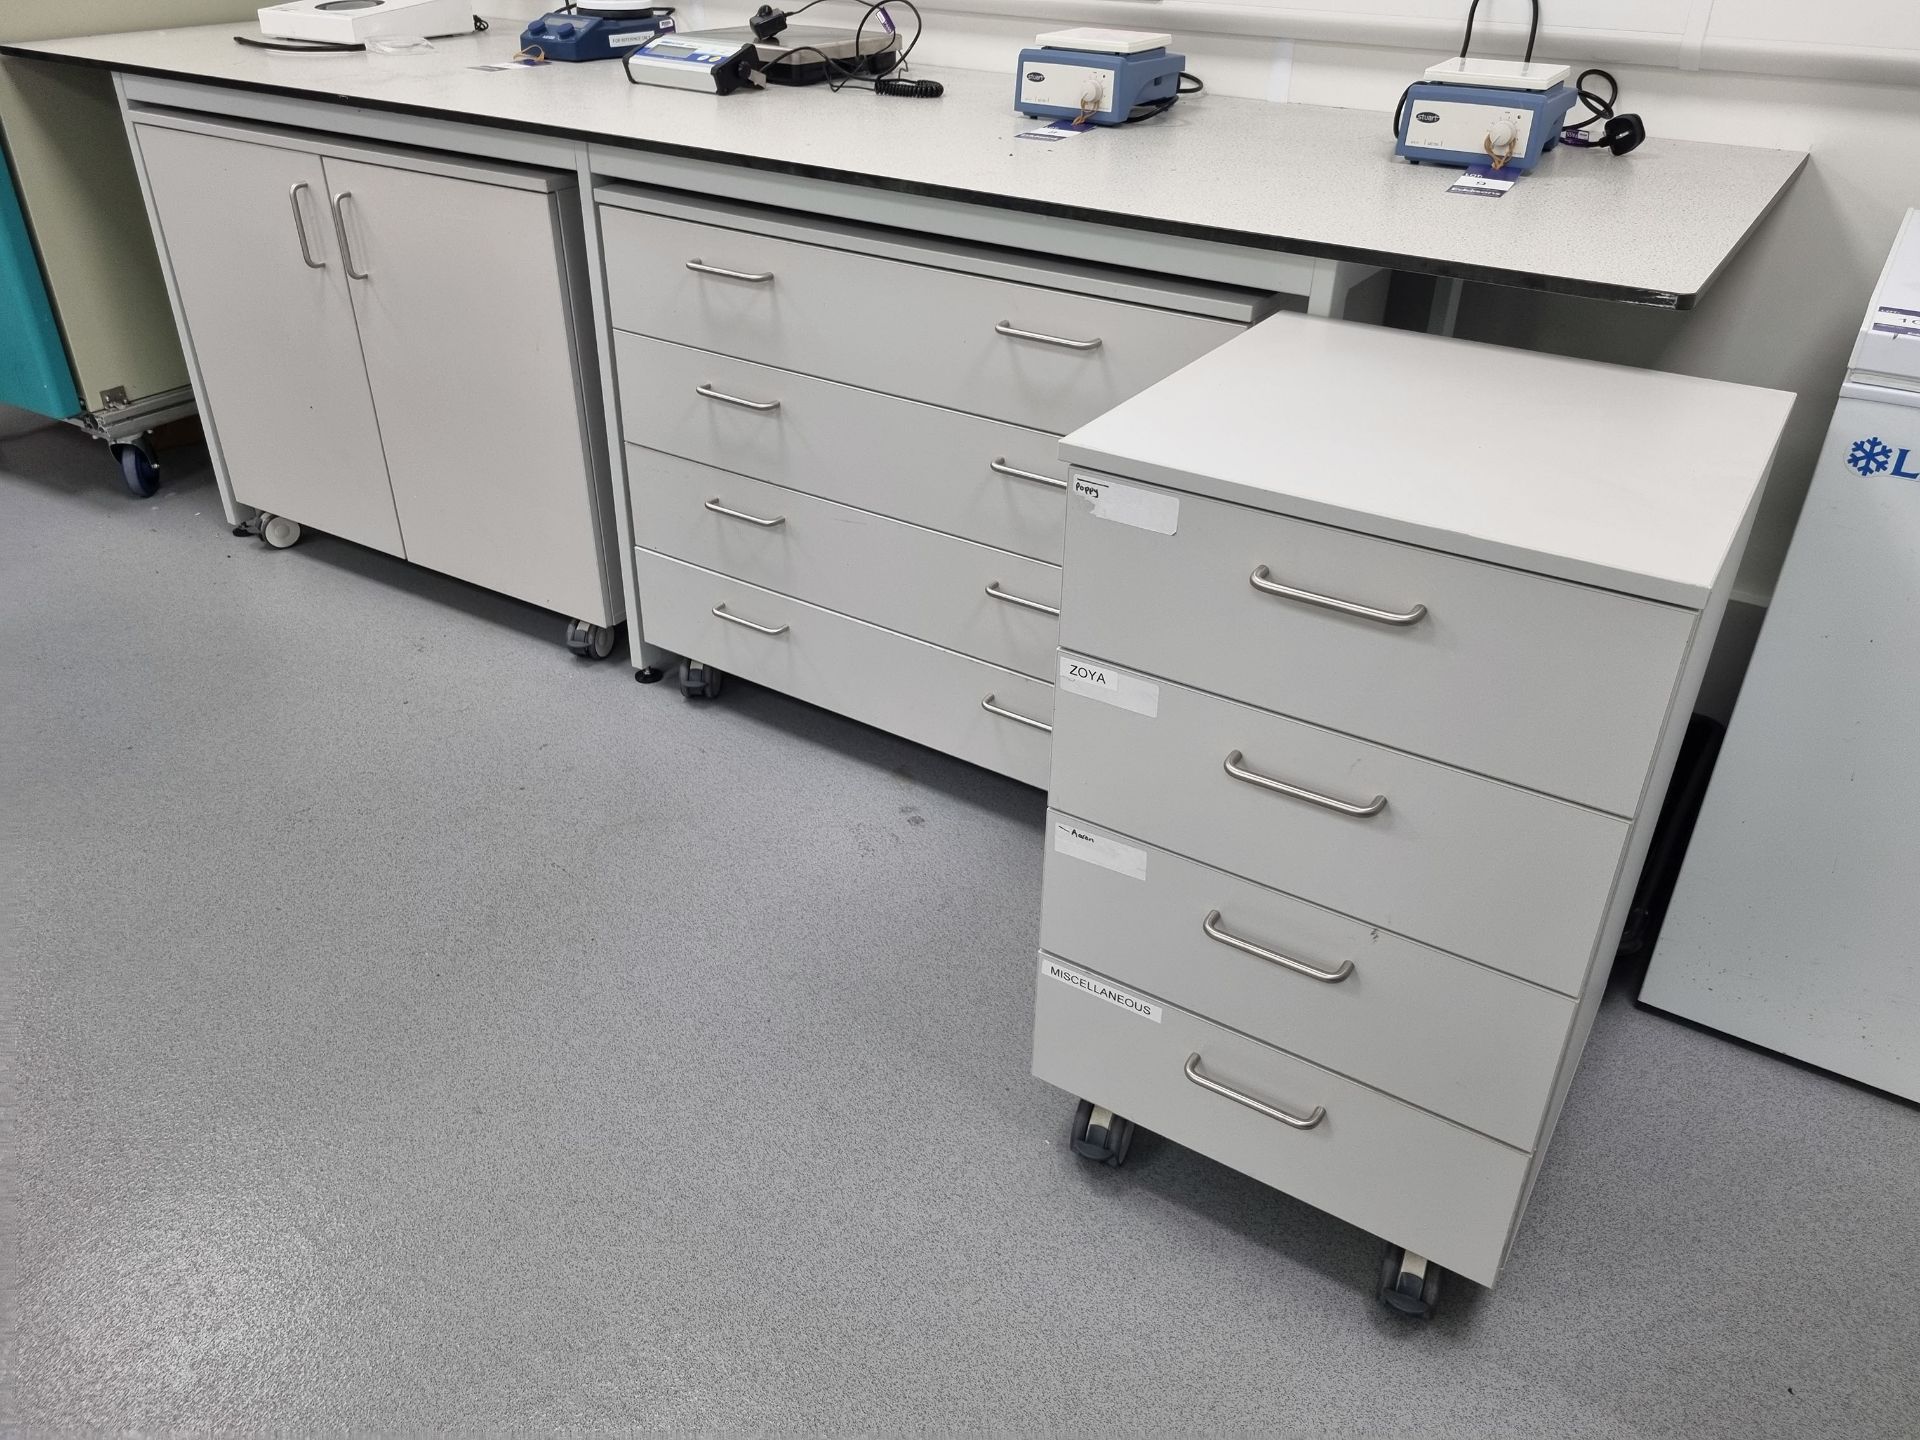 5x Laboratory Cabinets - Image 2 of 2